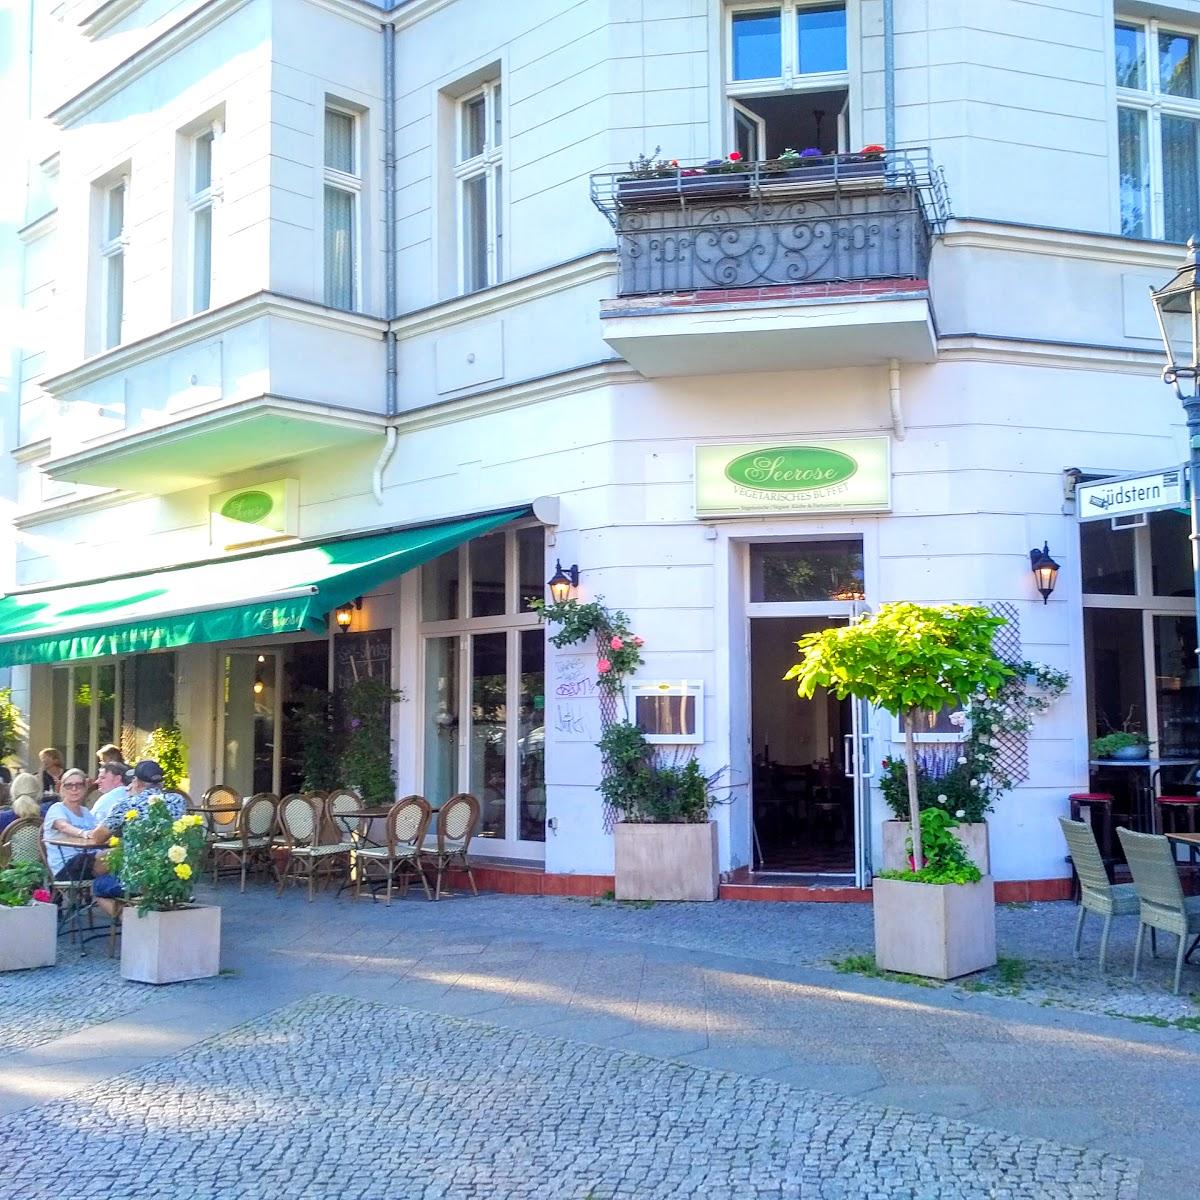 Restaurant "Seerose" in  Berlin